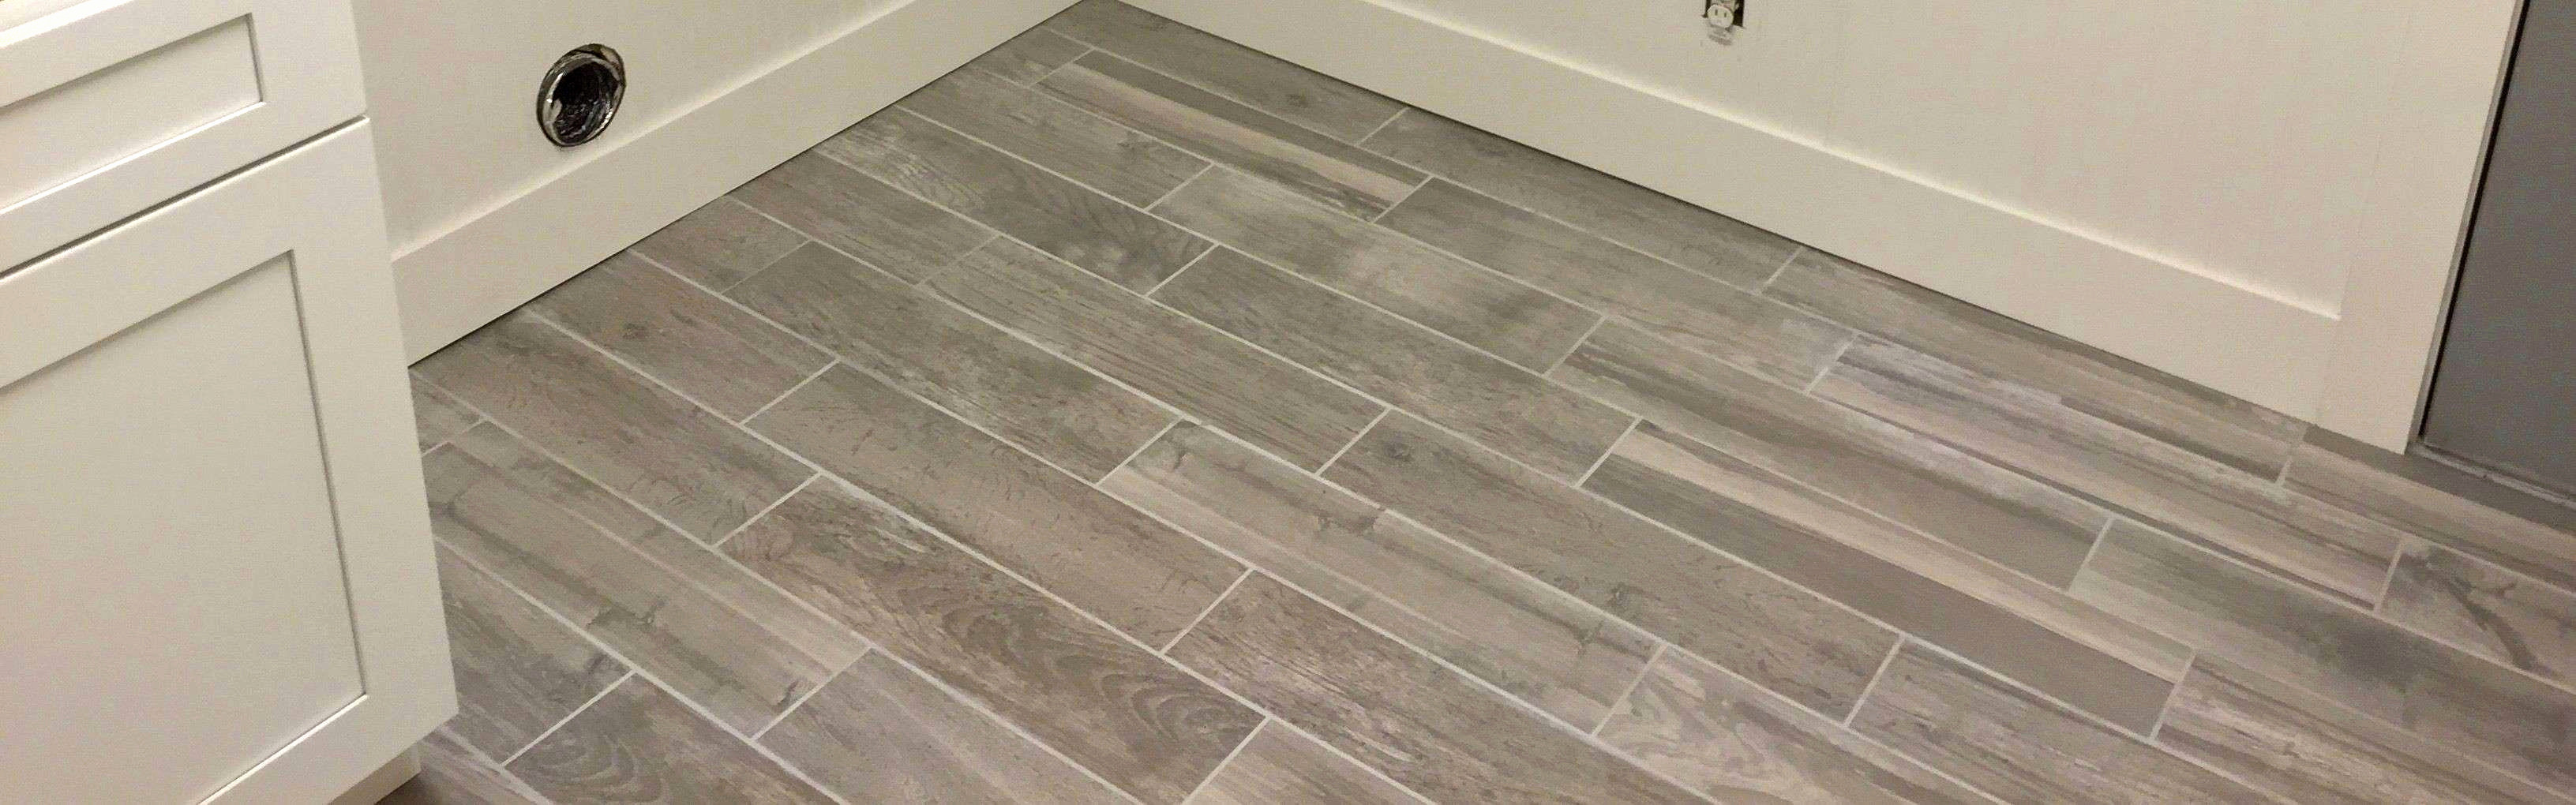 21 Elegant Can You Lay Hardwood Floors Over Tile 2024 free download can you lay hardwood floors over tile of laminate flooring over tile dahuacctvth com in laminate flooring over tile